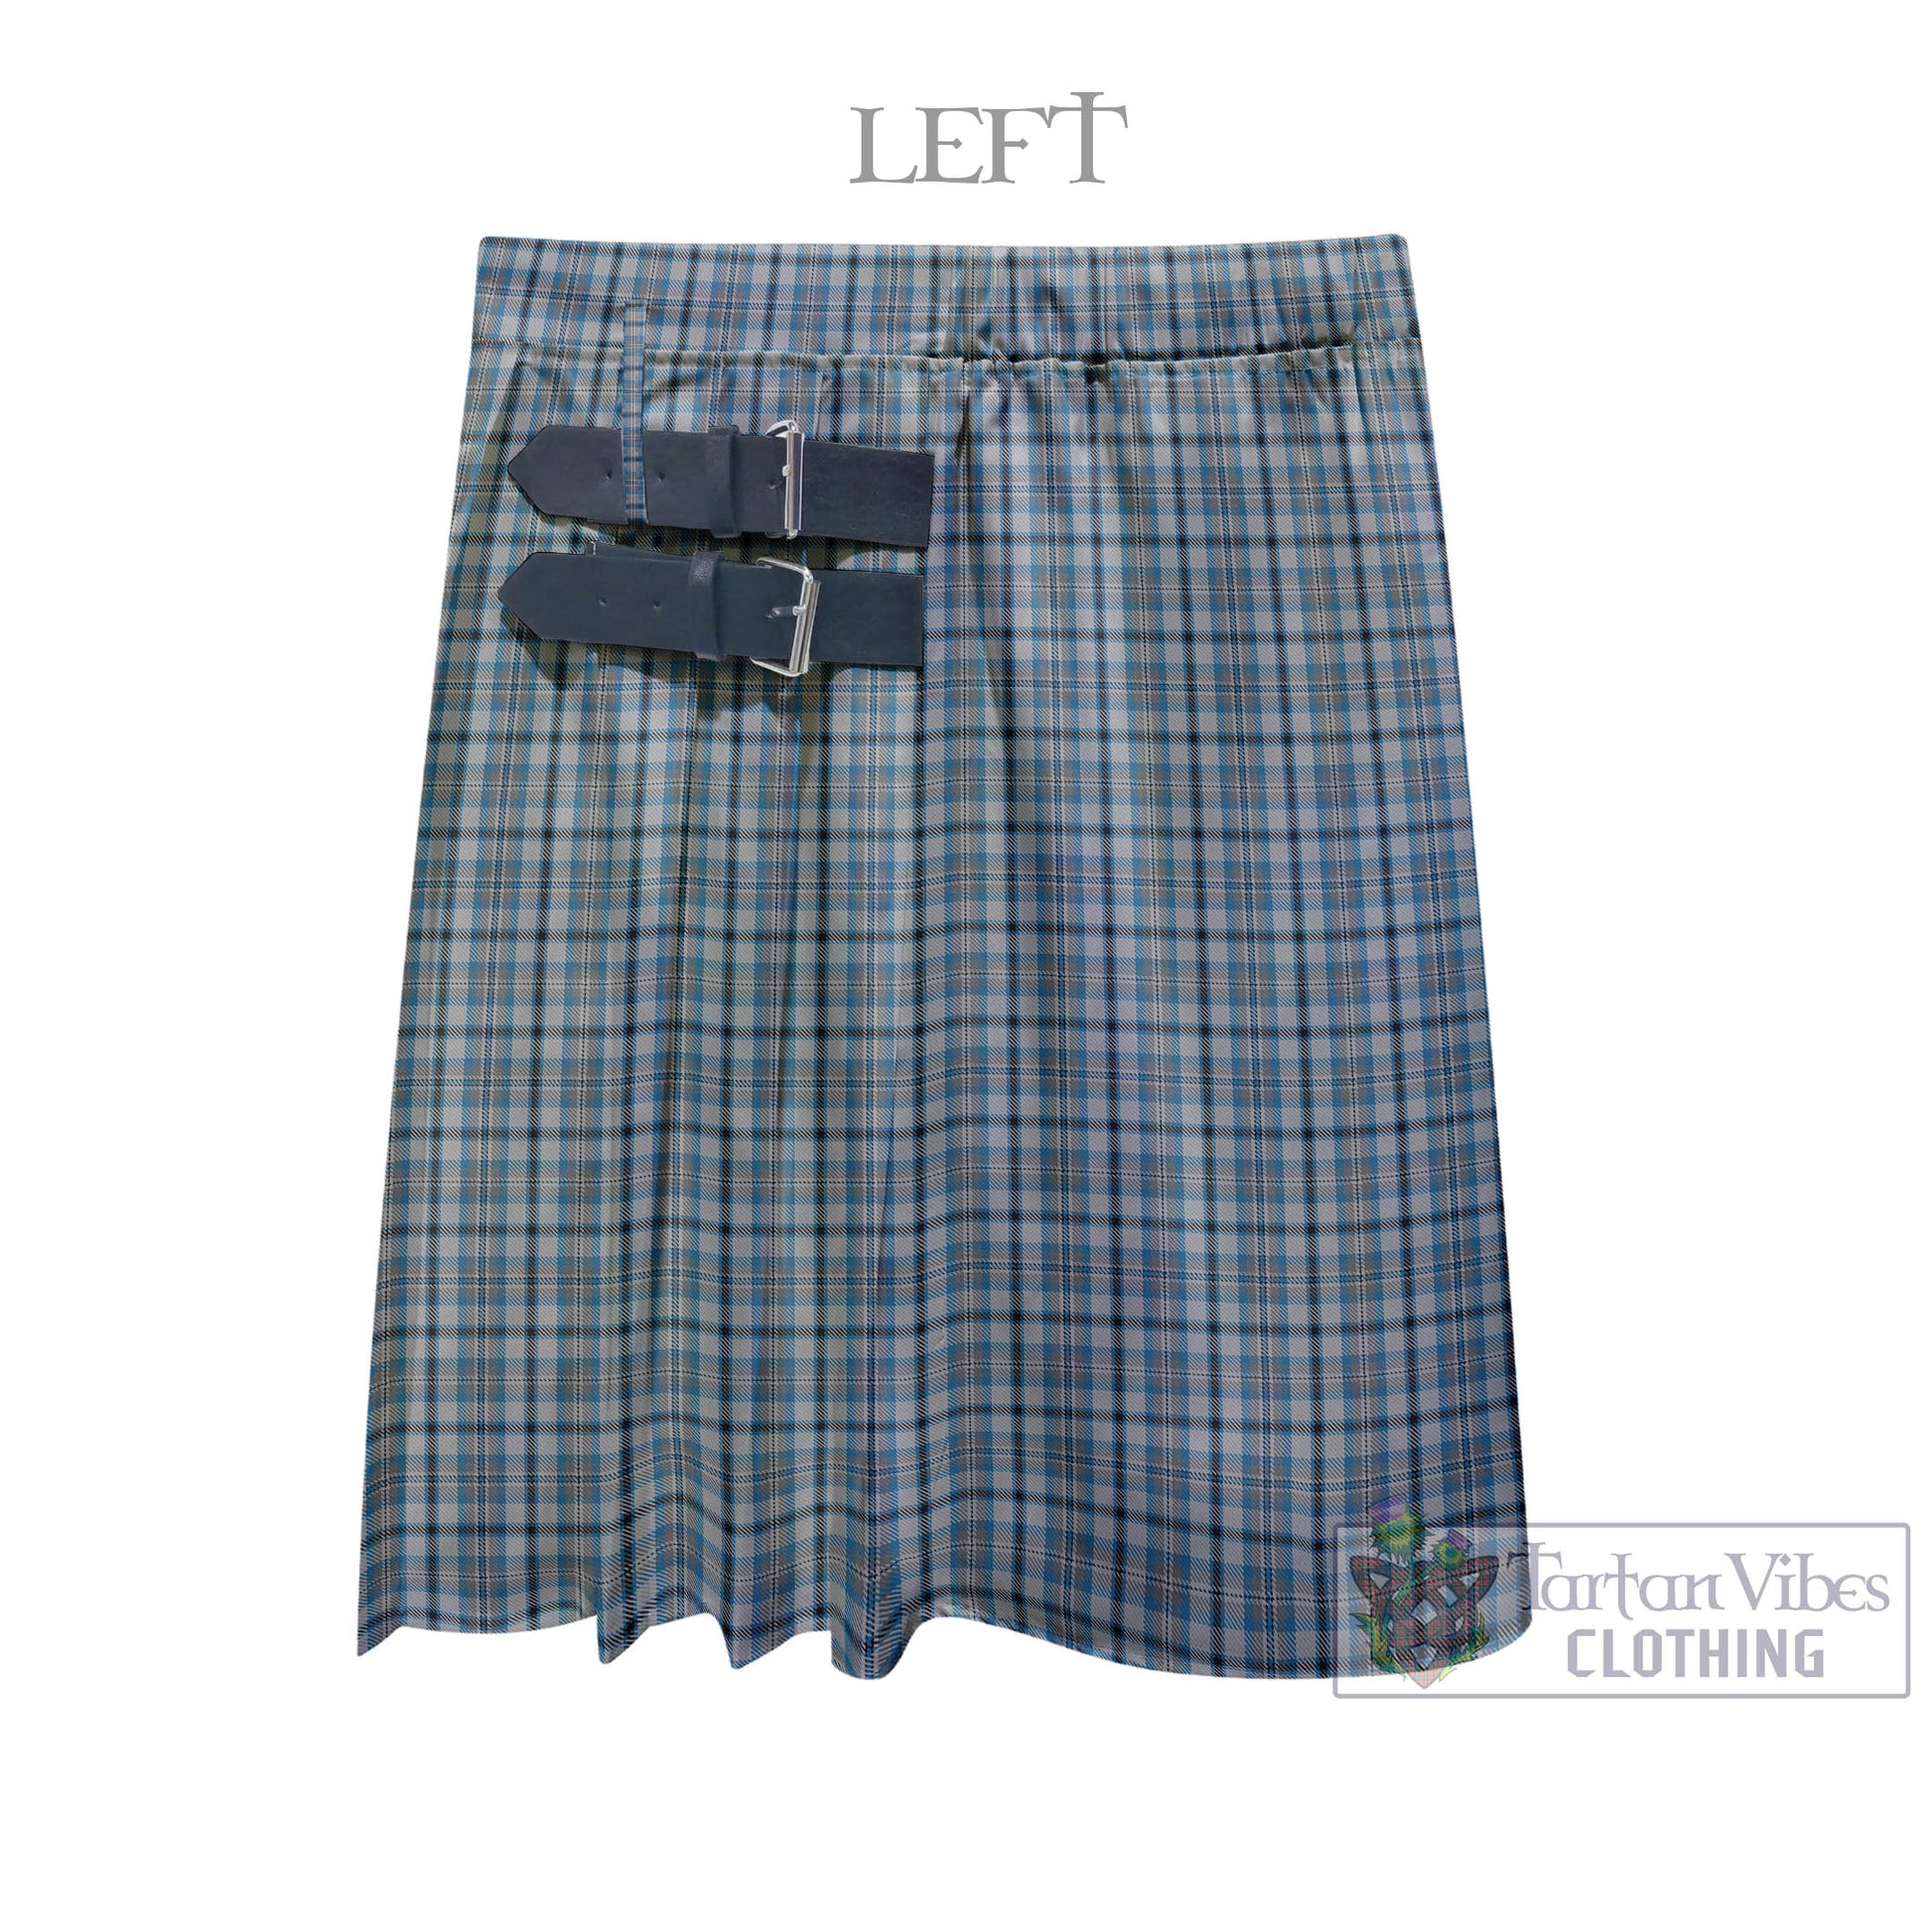 Tartan Vibes Clothing Conquergood Tartan Men's Pleated Skirt - Fashion Casual Retro Scottish Style